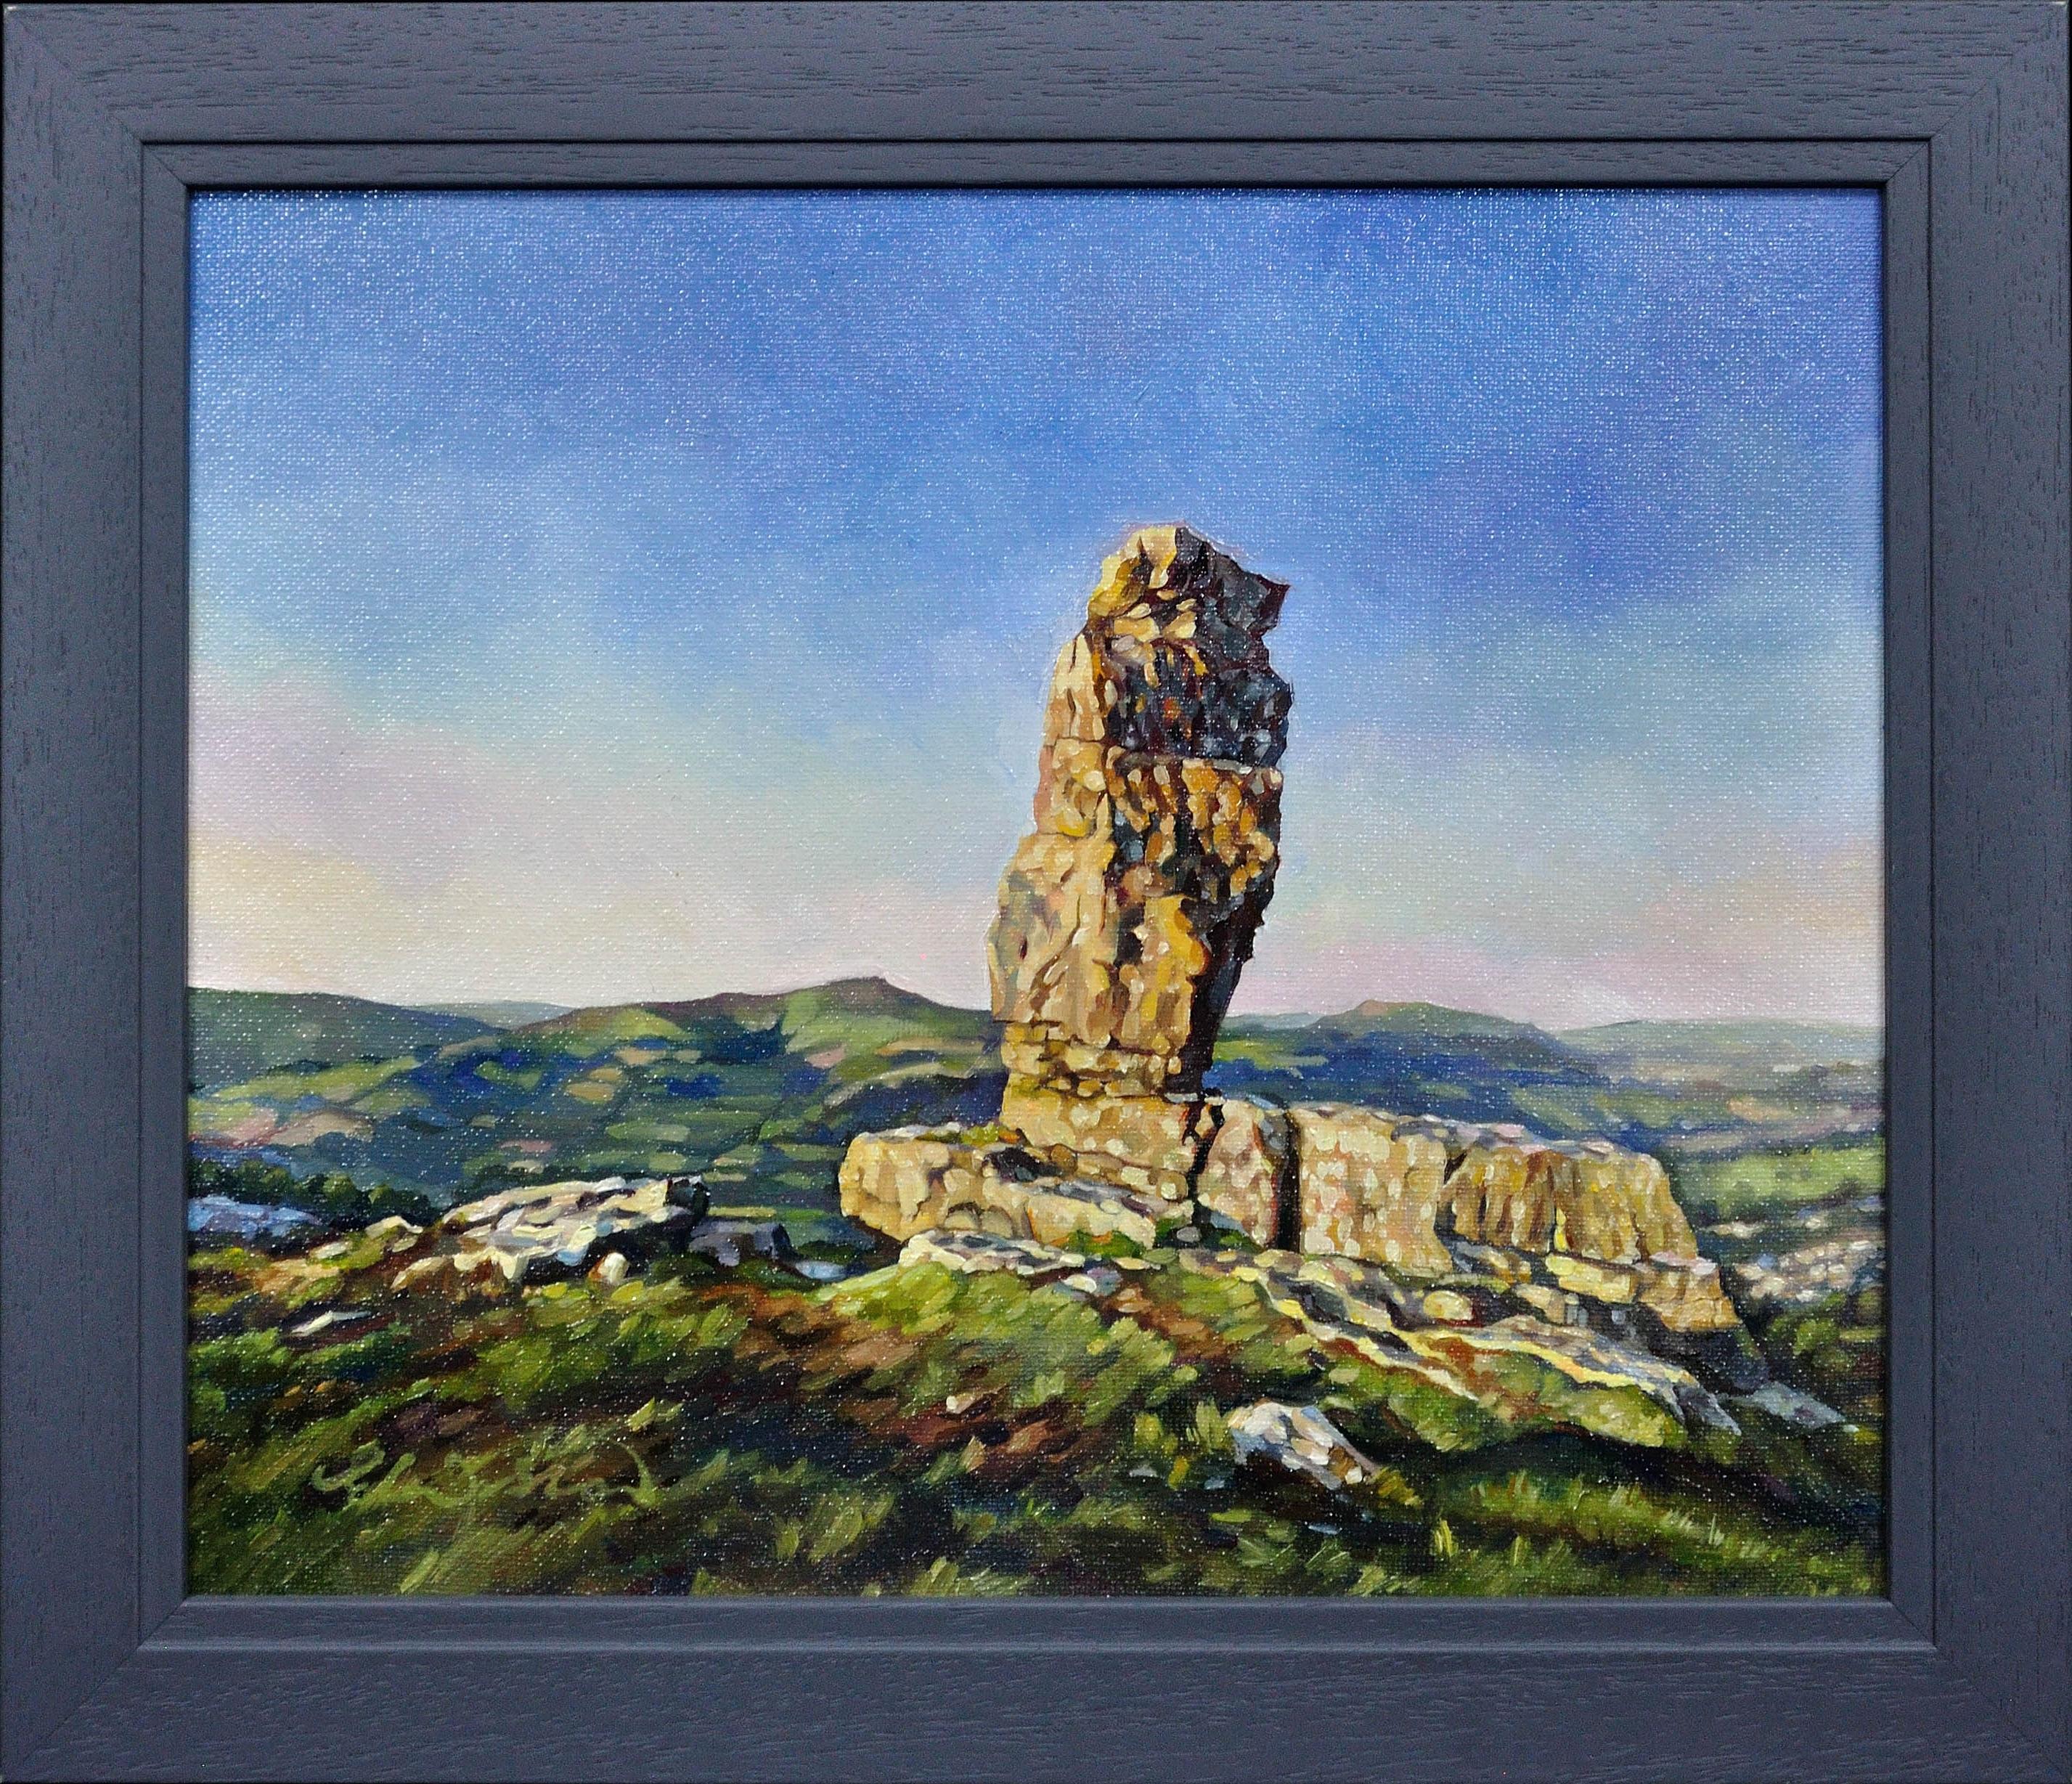 Elin Sian Blake Landscape Painting - Y Bugail Unig (The Lonely Shepherd), Llangattock, Brecon Beacons. Welsh Folklore